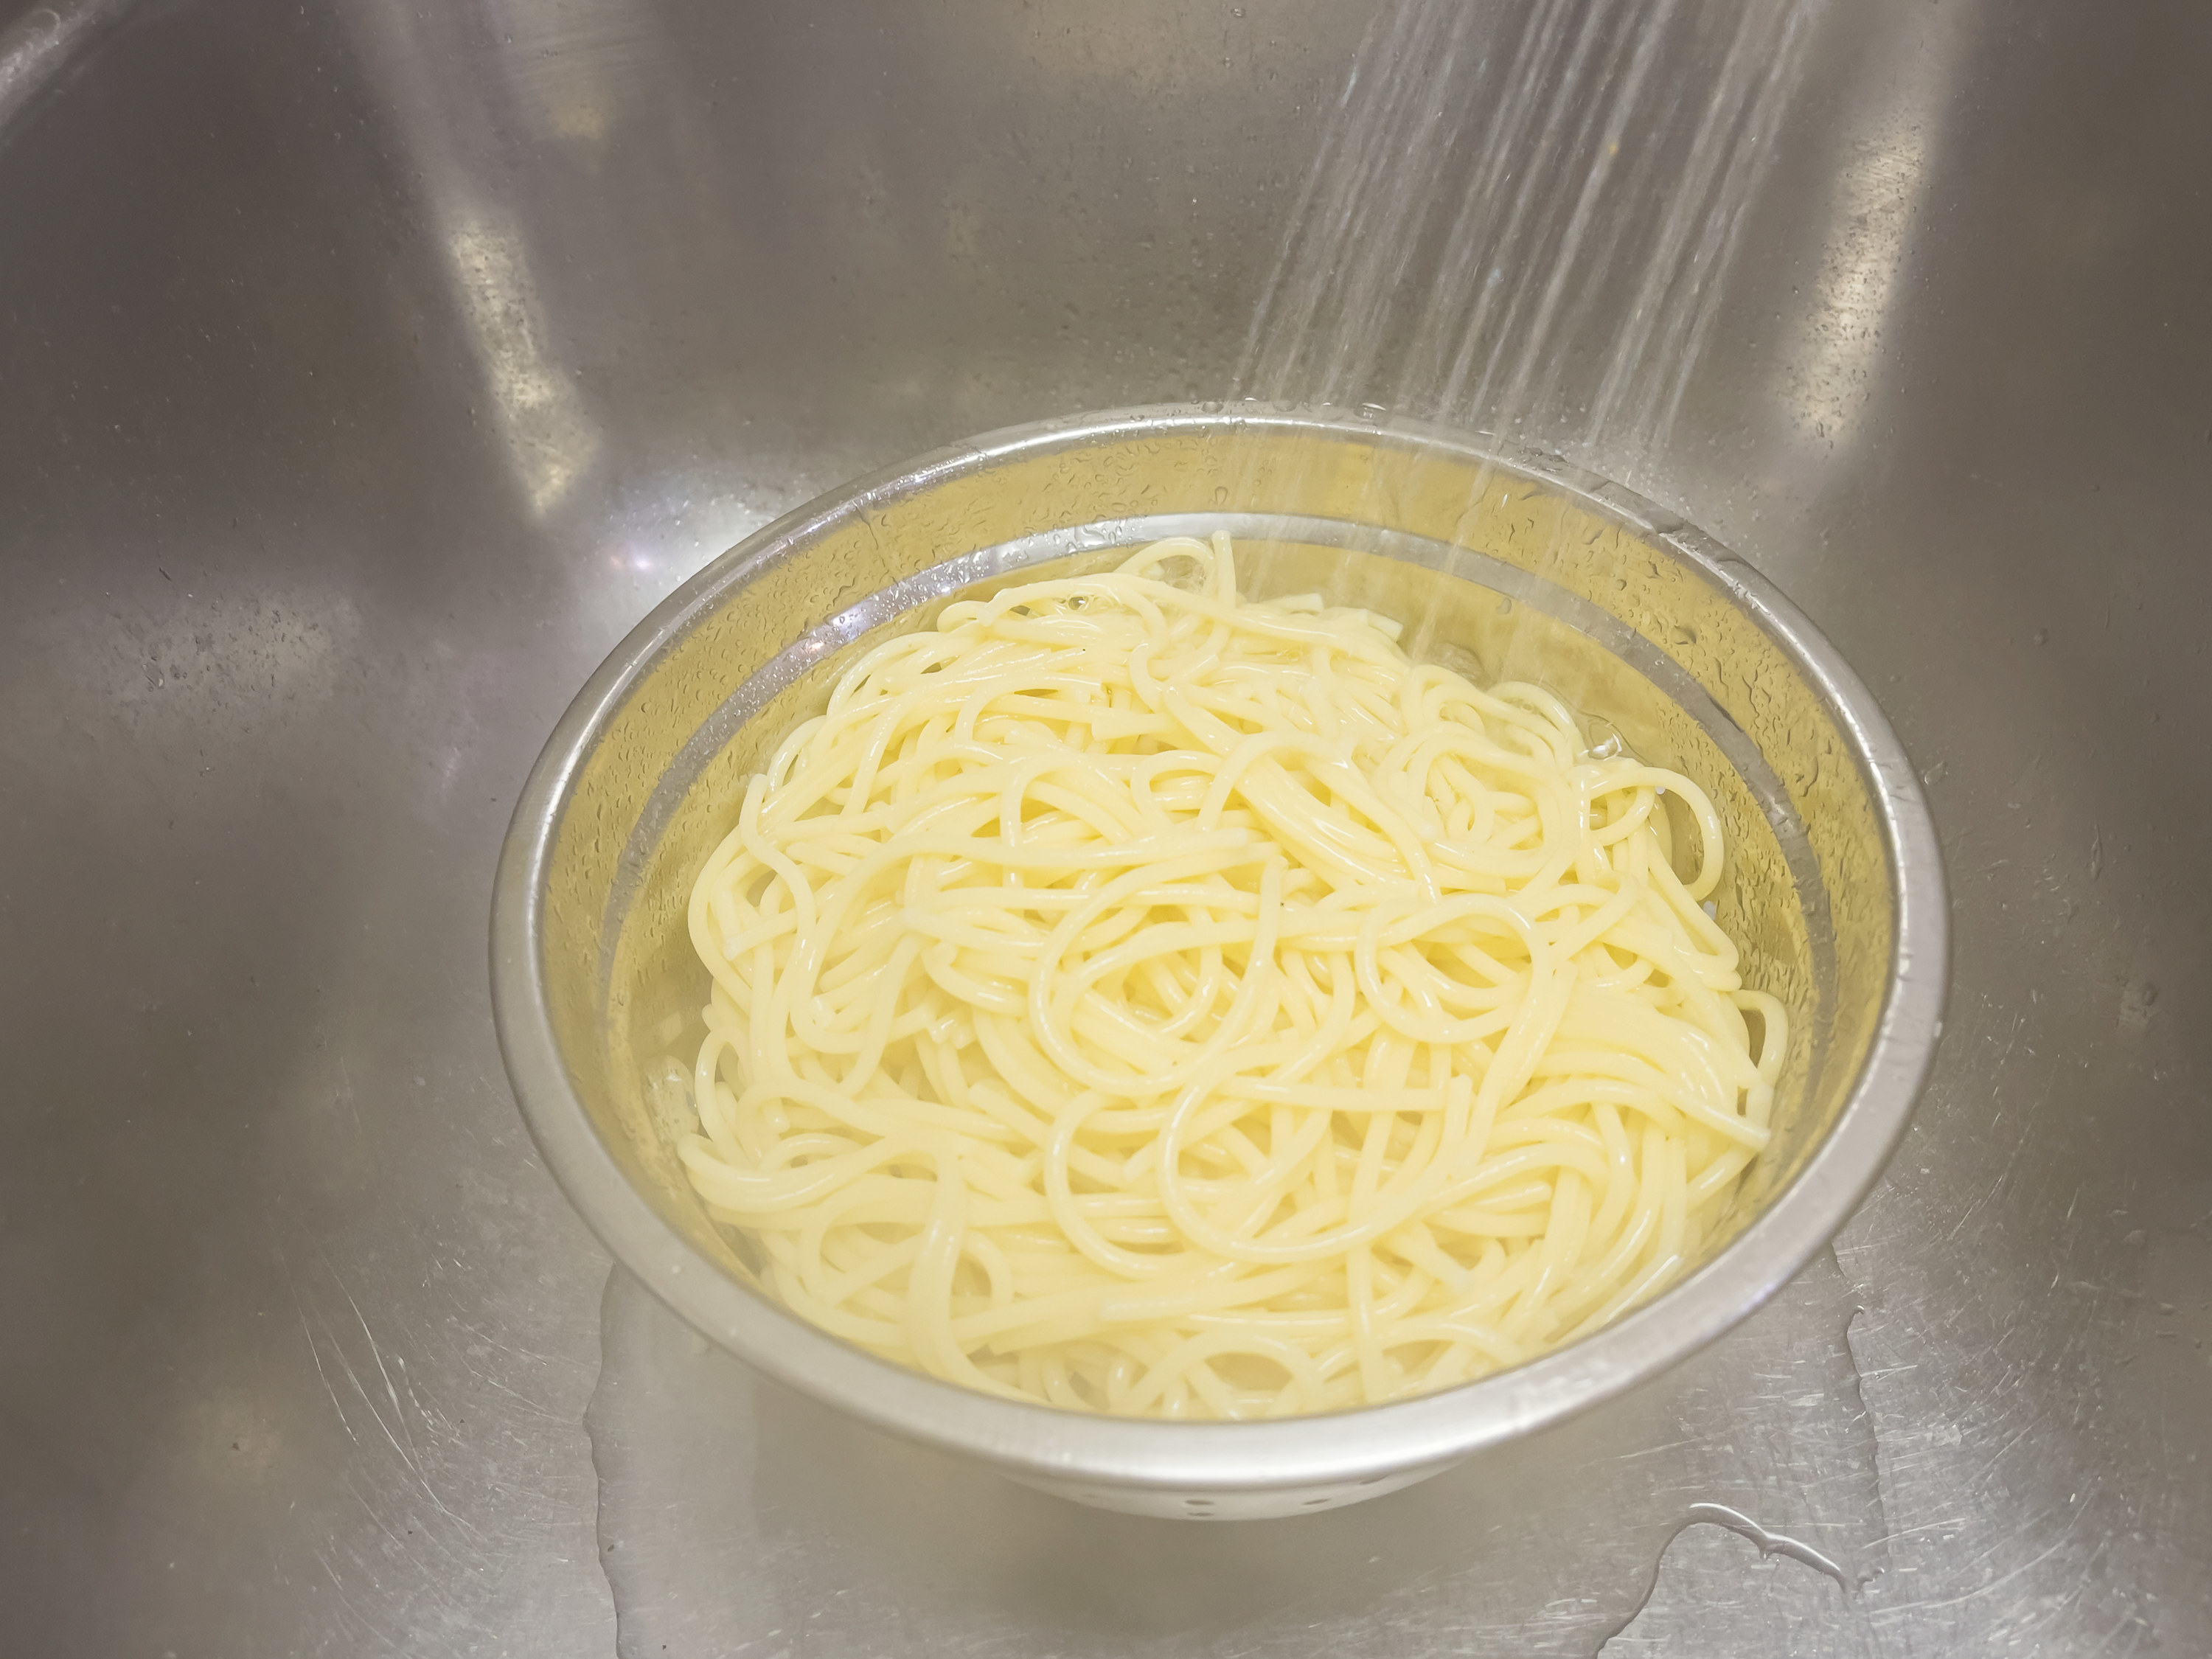 rinsing pasta under running water